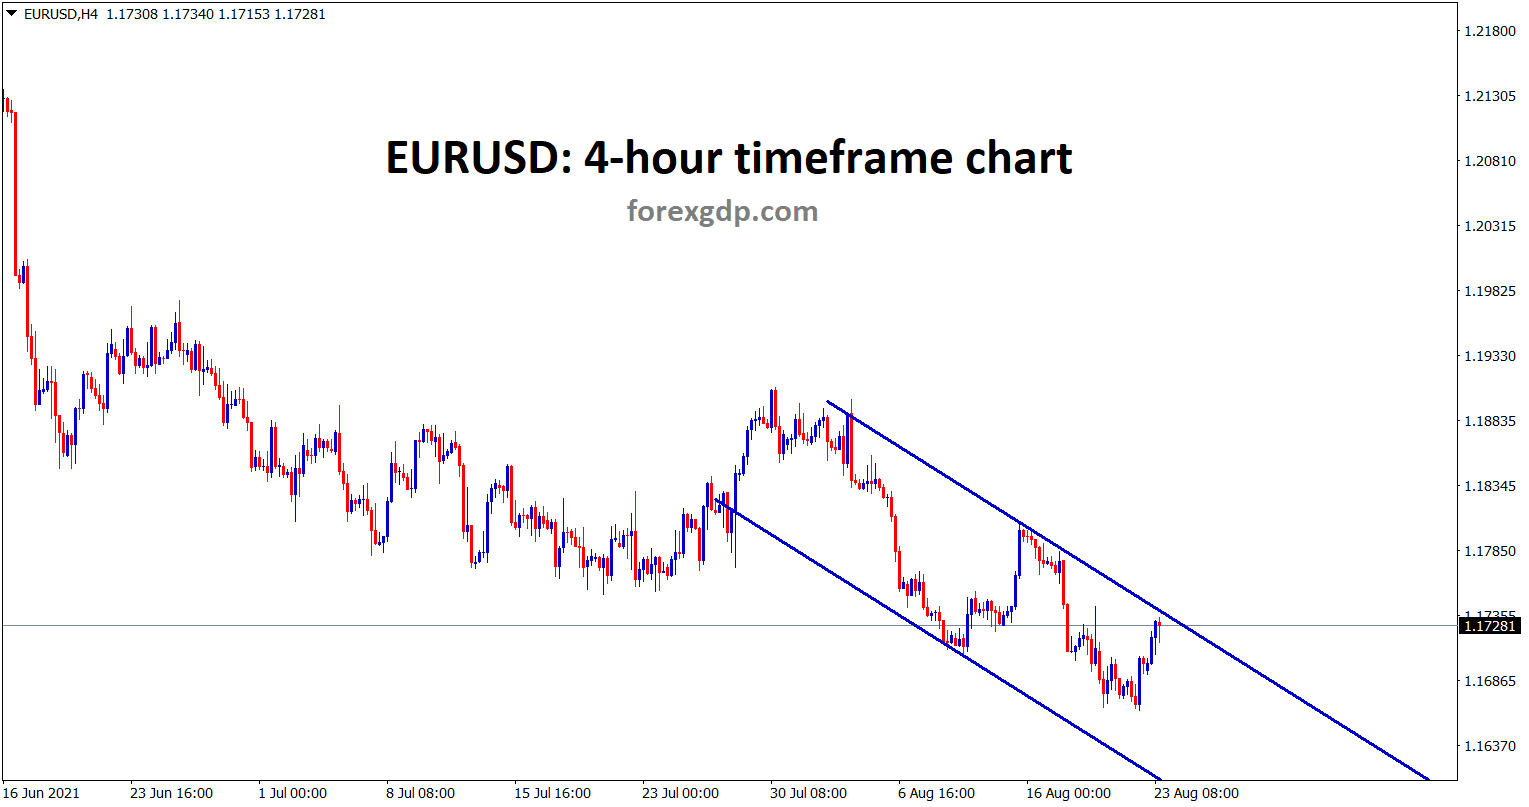 EURUSD is moving in a minor descending channel range